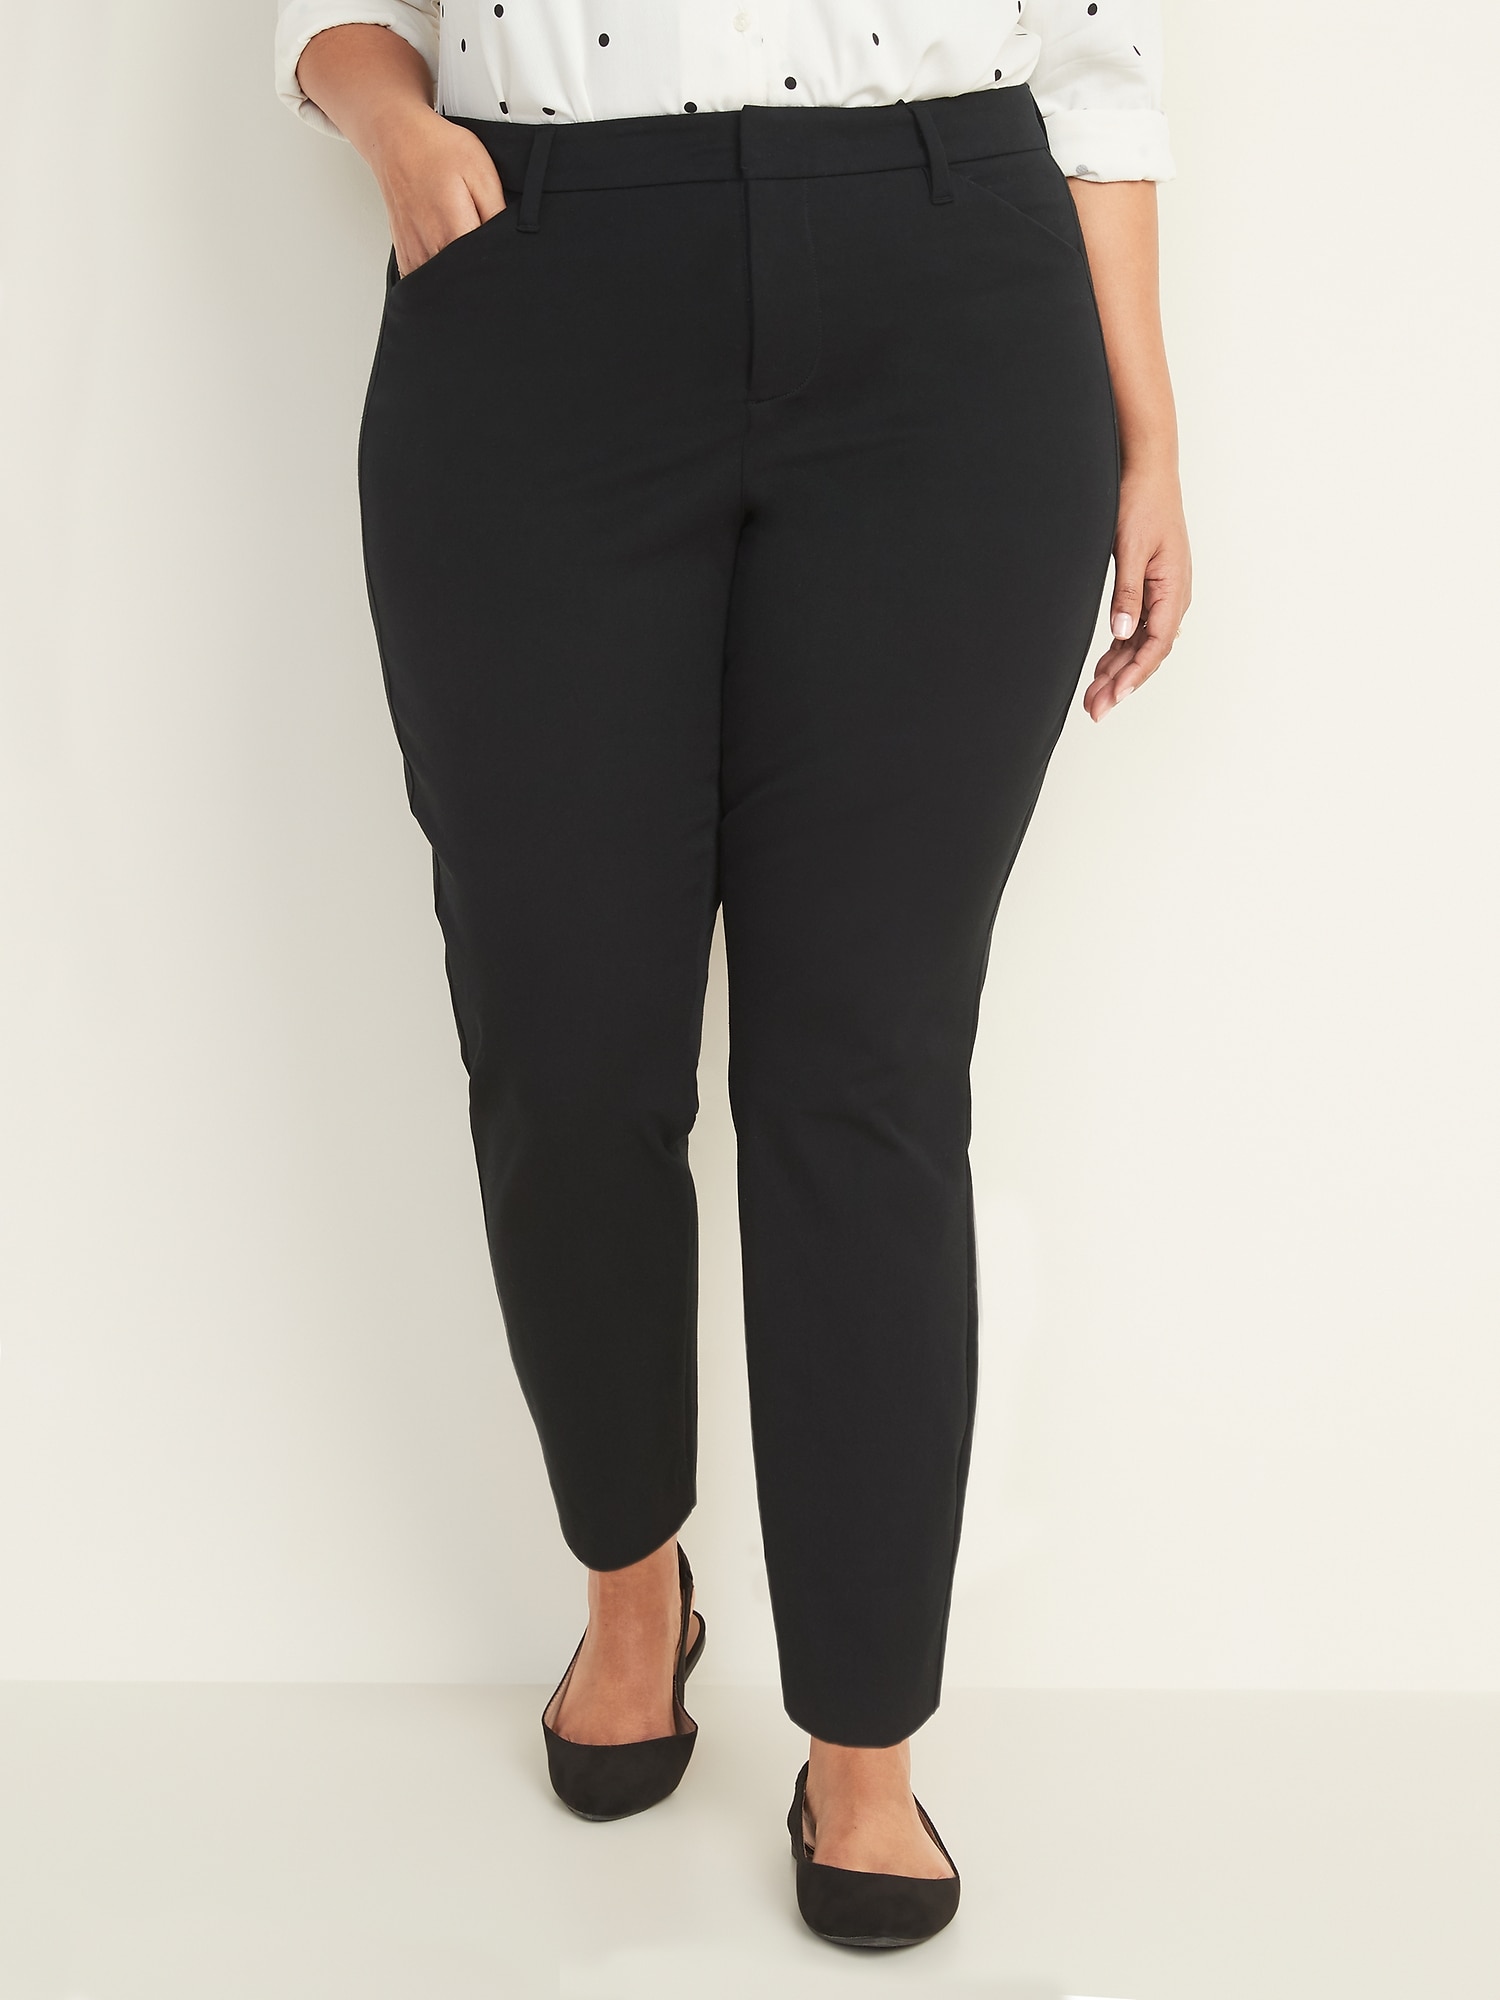 High-Waisted Secret-Slim Pockets Plus-Size Pixie Pants | Old Navy